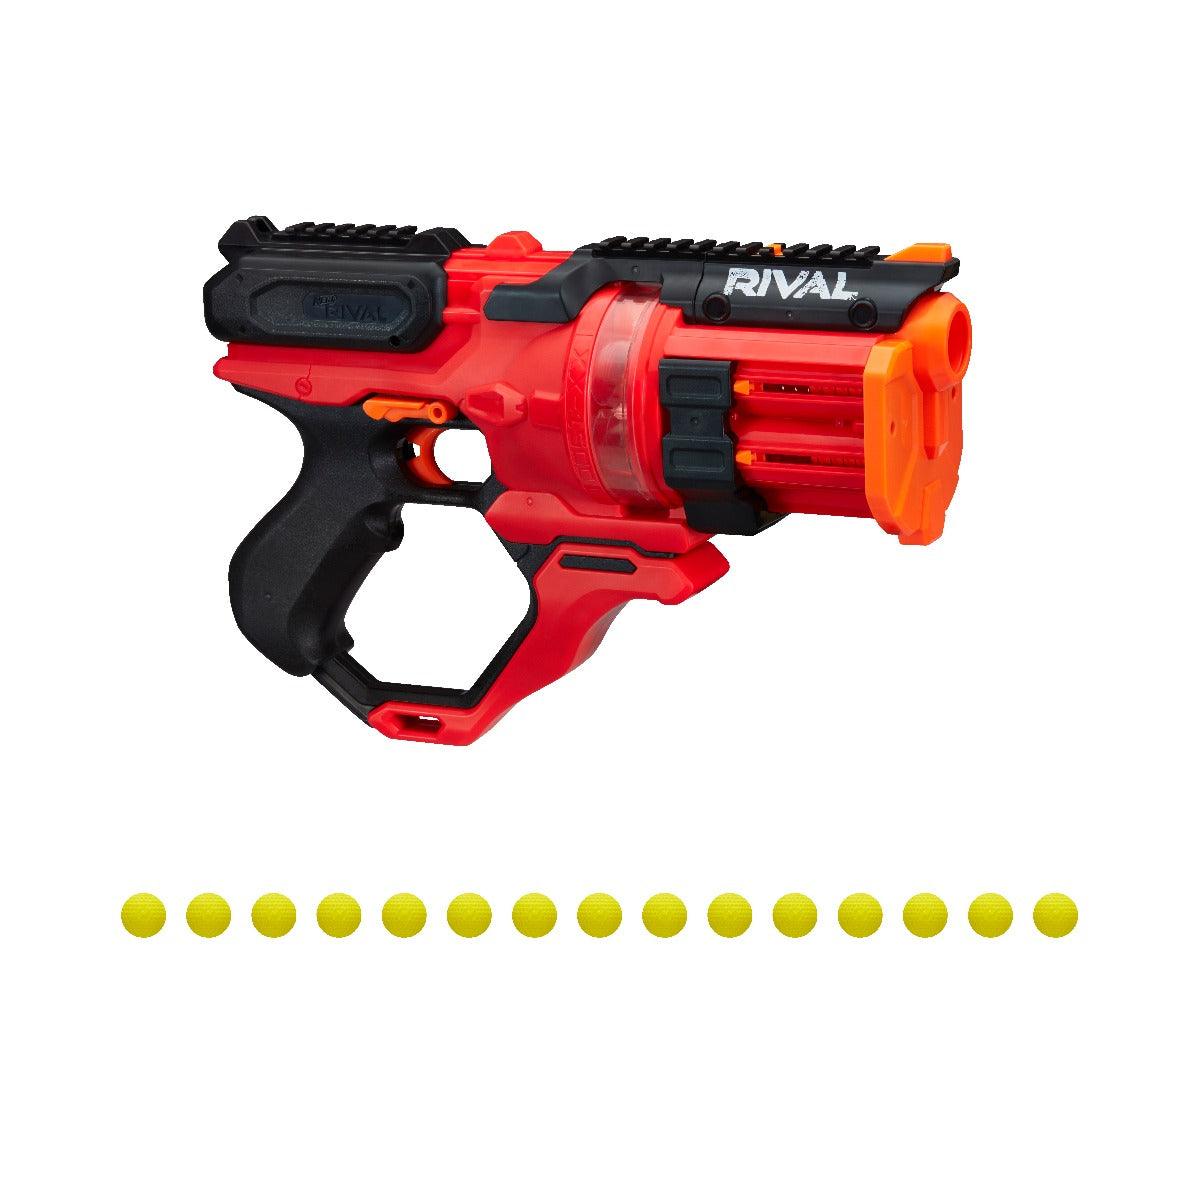 Rapid-Fire Toy Guns : rival nerf guns